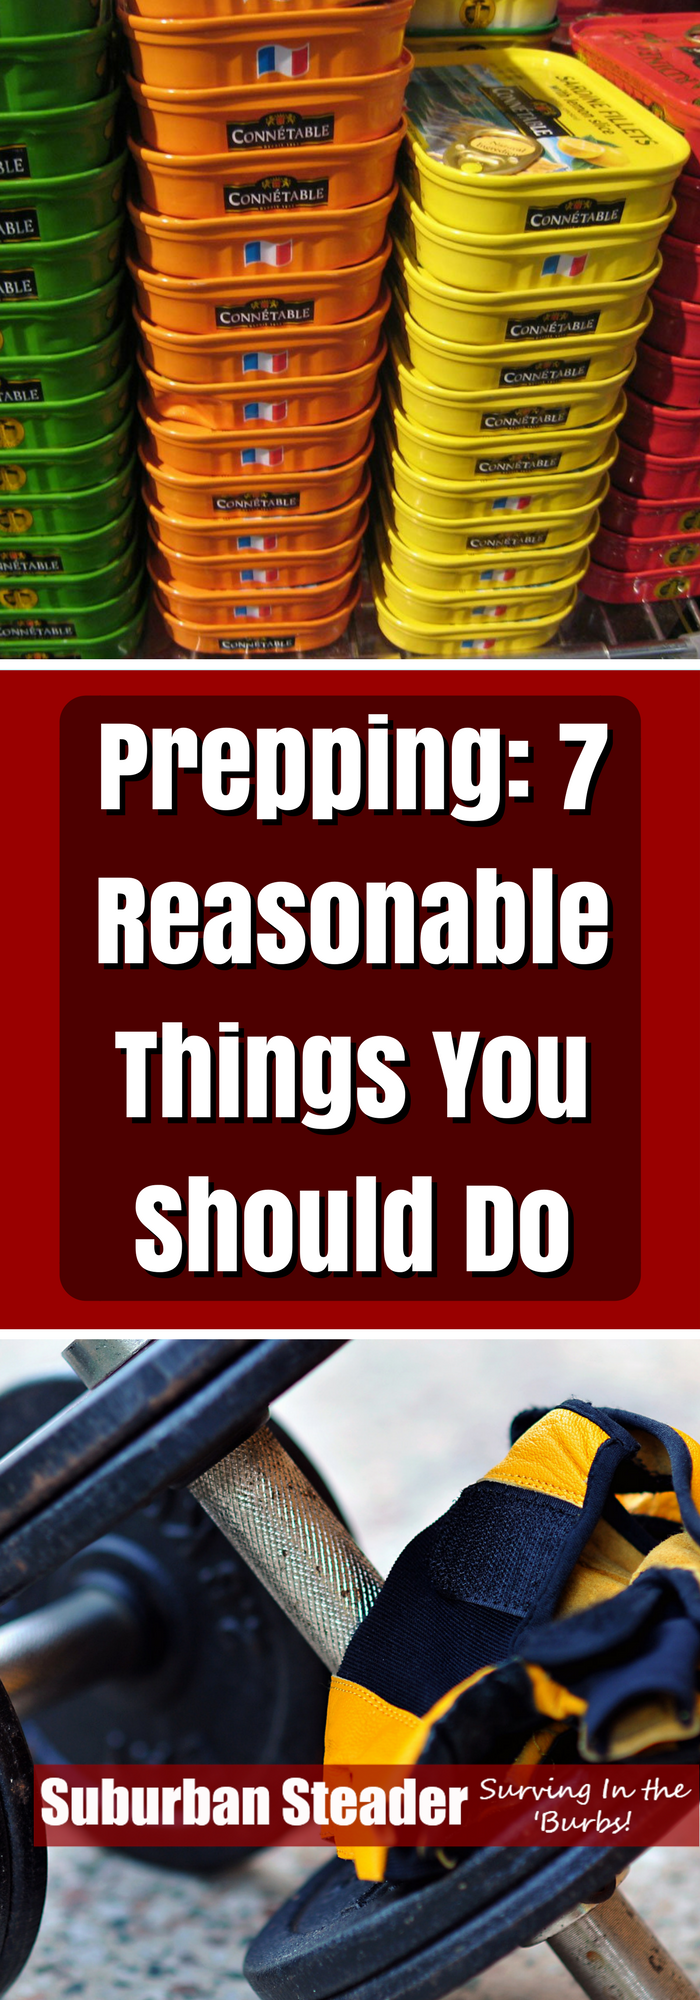 Seven (7) Reasonable Prepping Tips